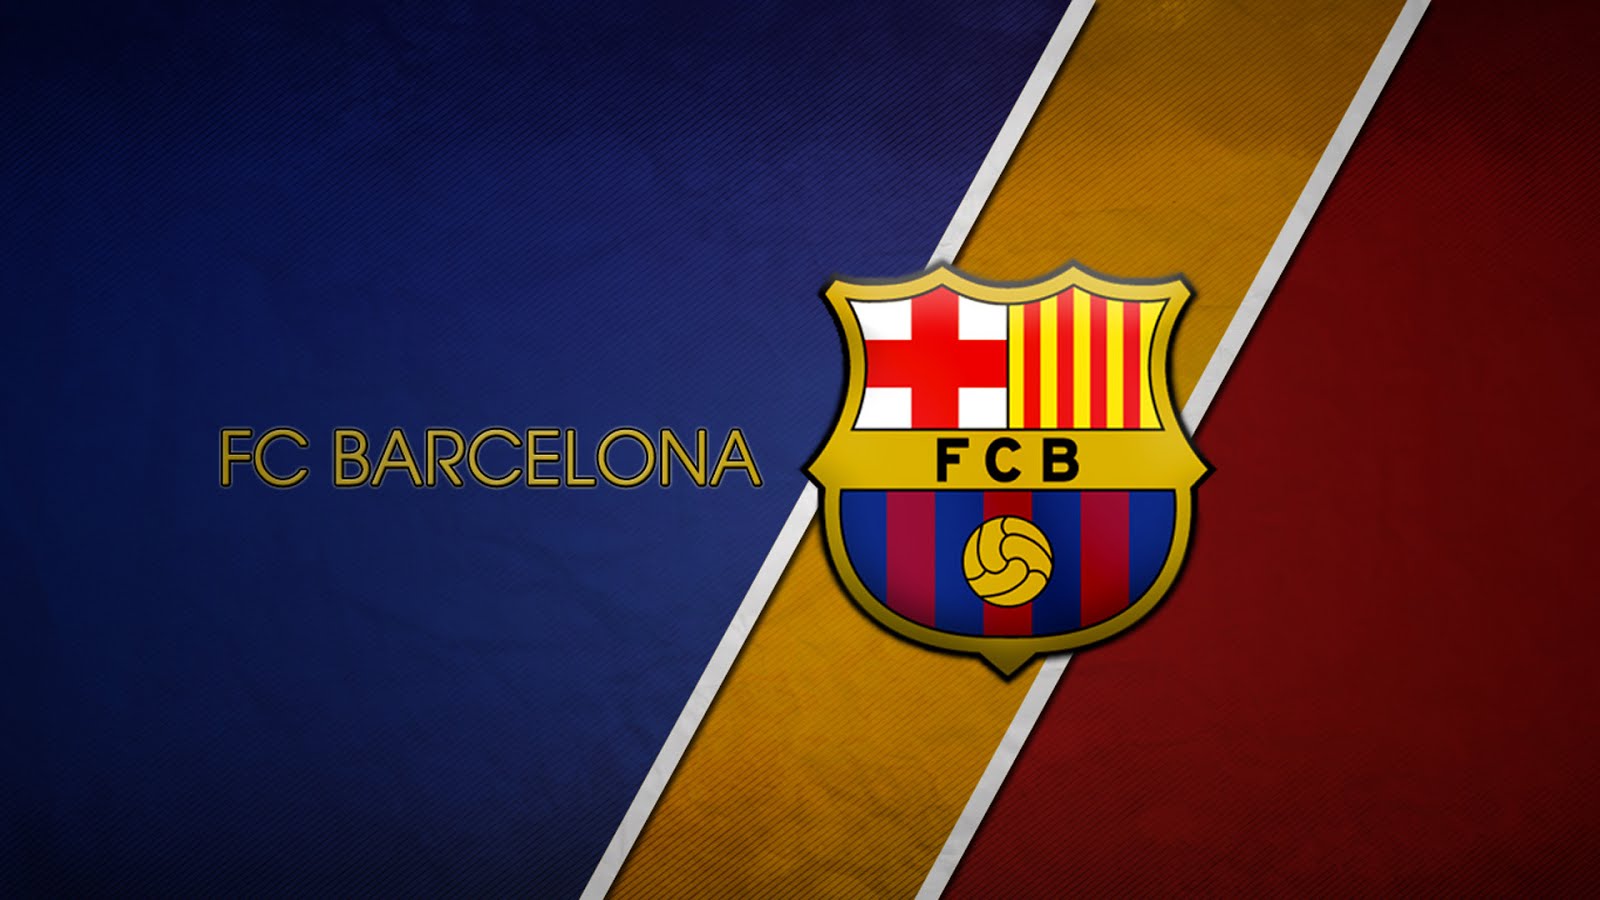 Barca FC logo